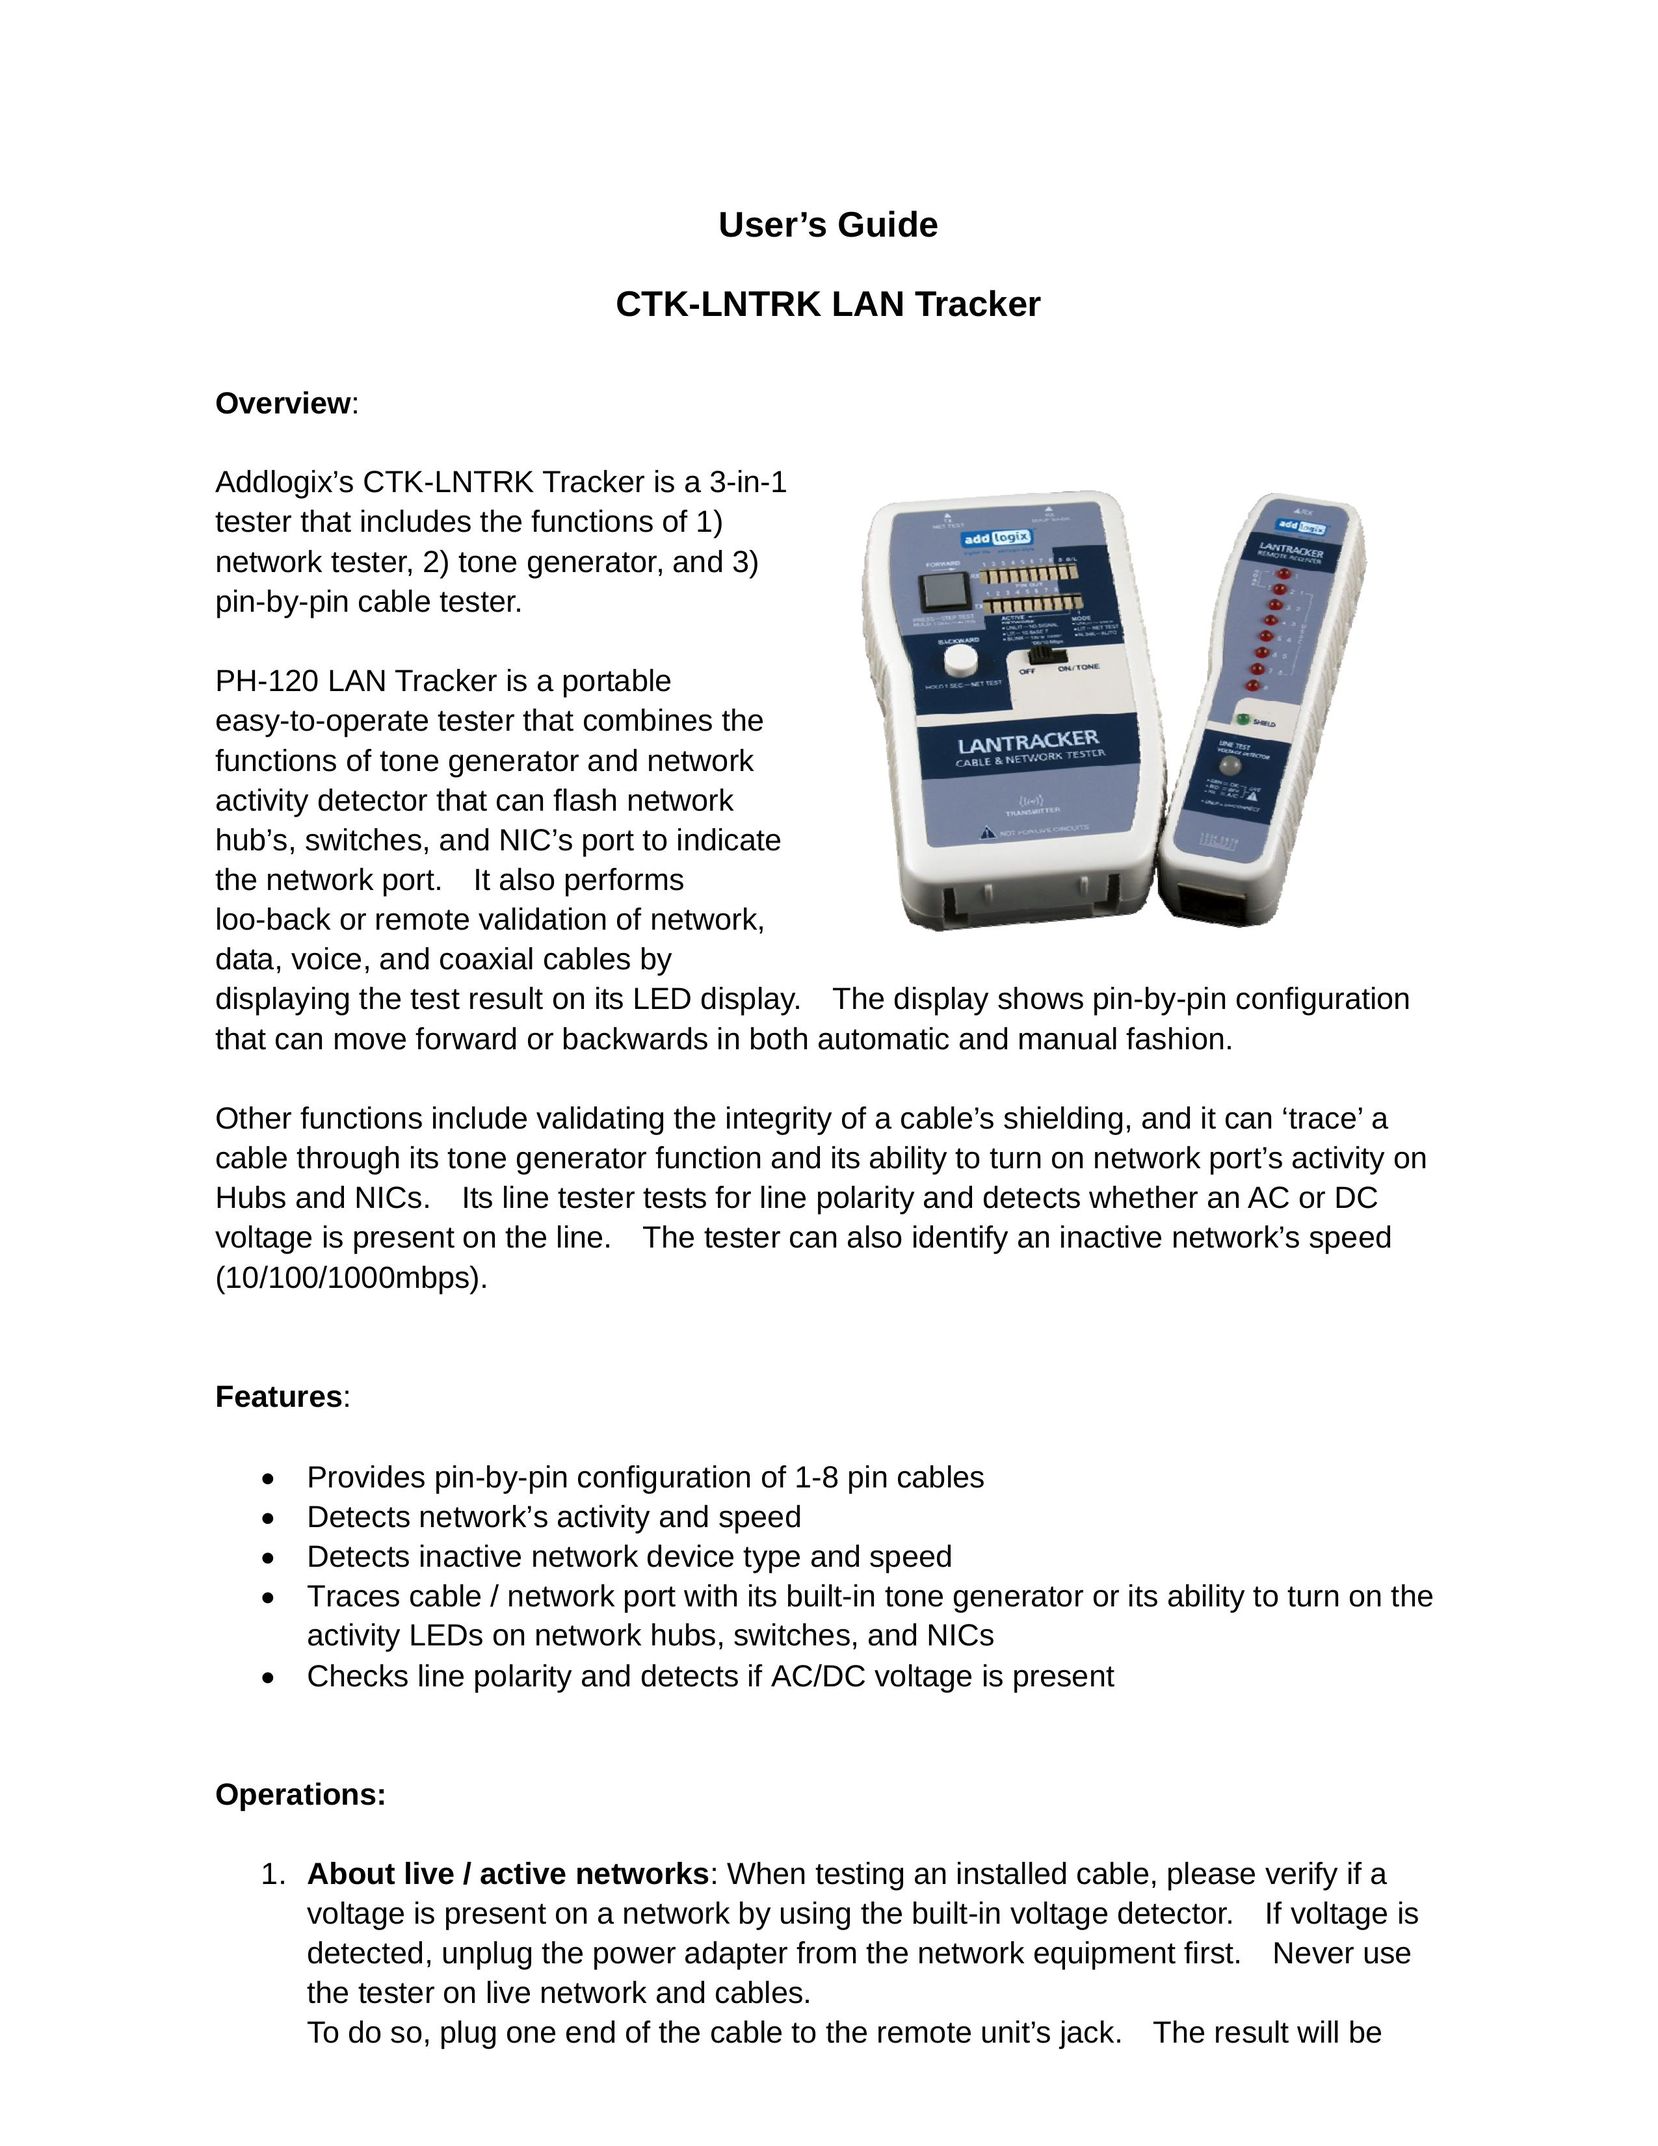 Addlogix CTK-LNTRK Network Hardware User Manual